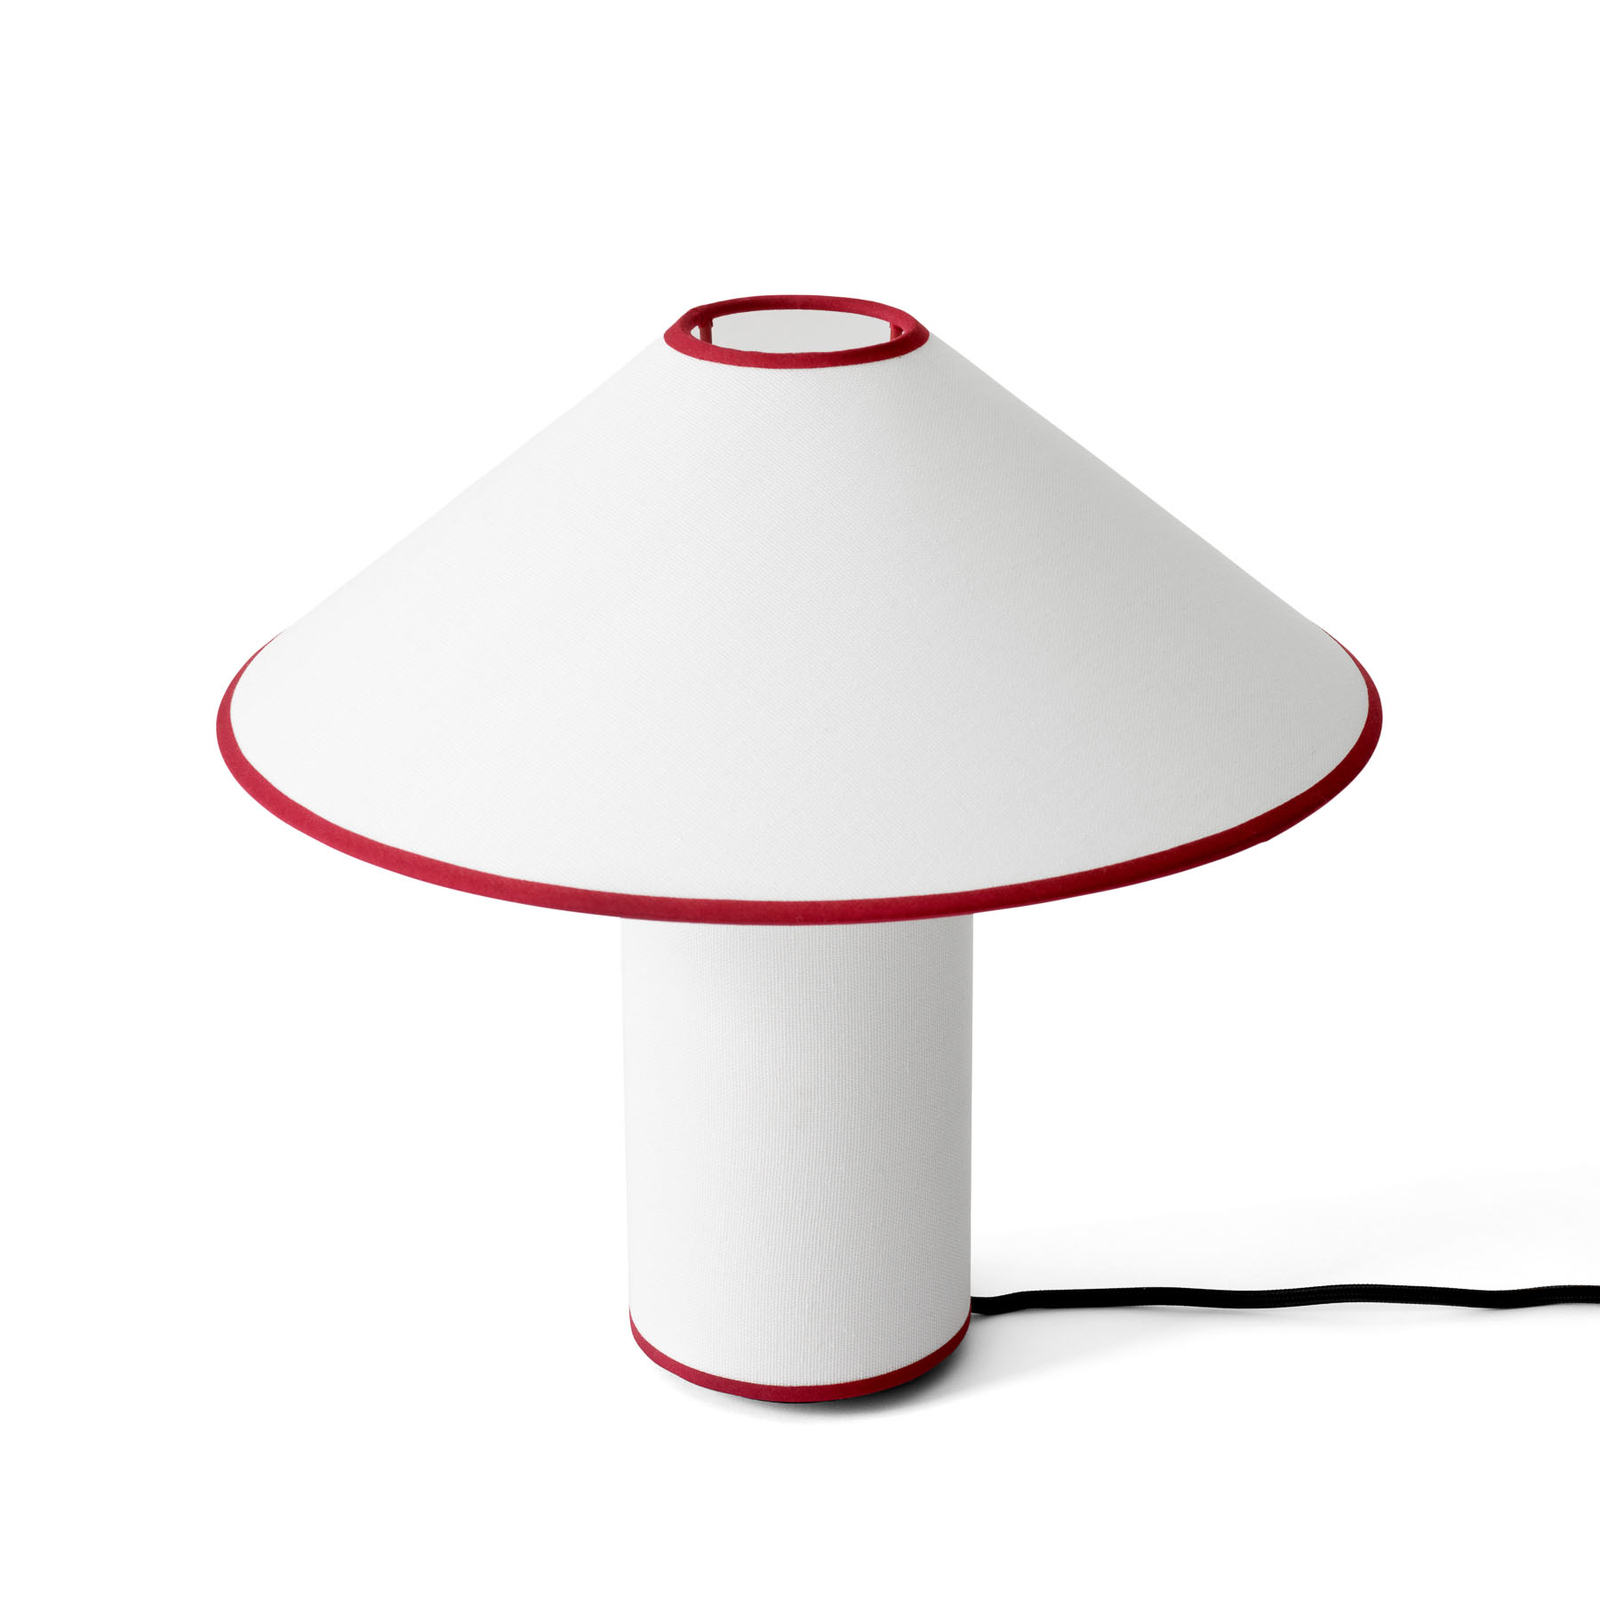 &Tradition Colette ATD6 table lamp, white/merlot